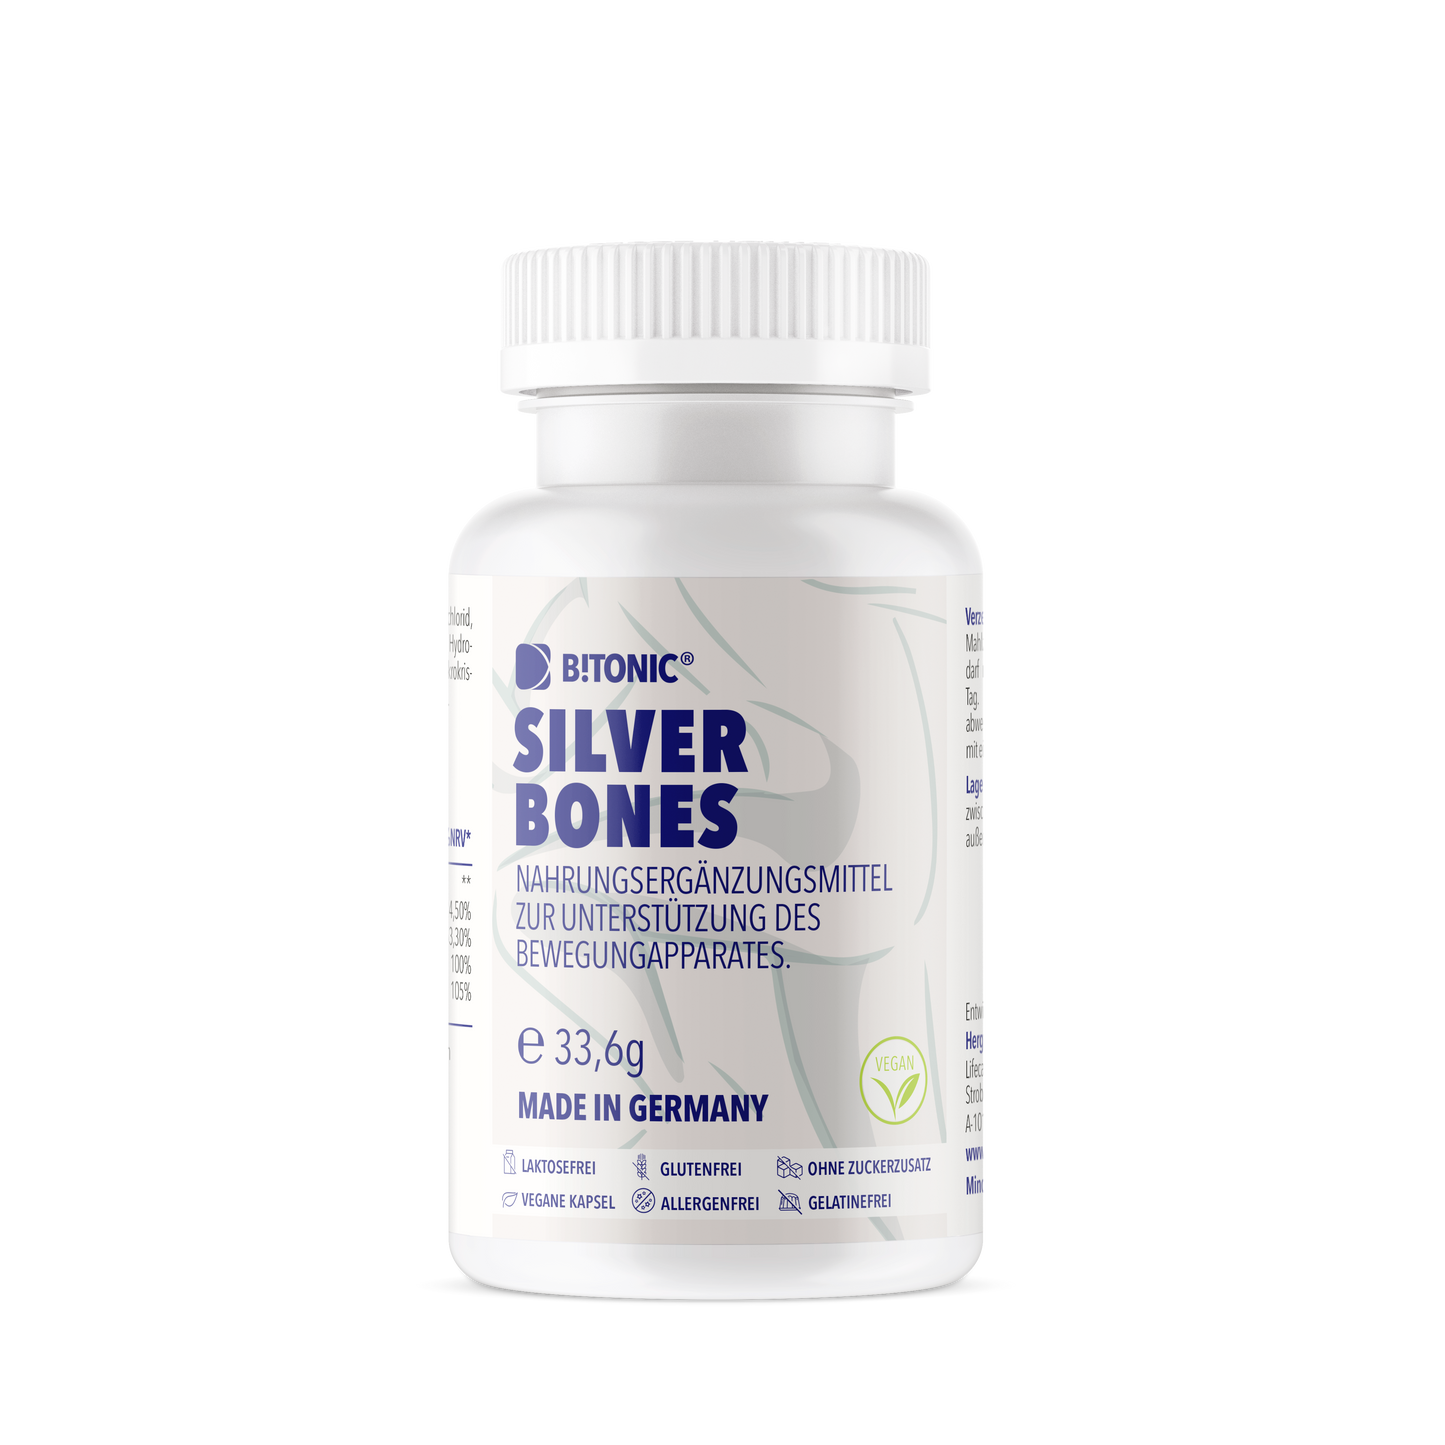 B!TONIC® Silver Bones - Natural joint complex